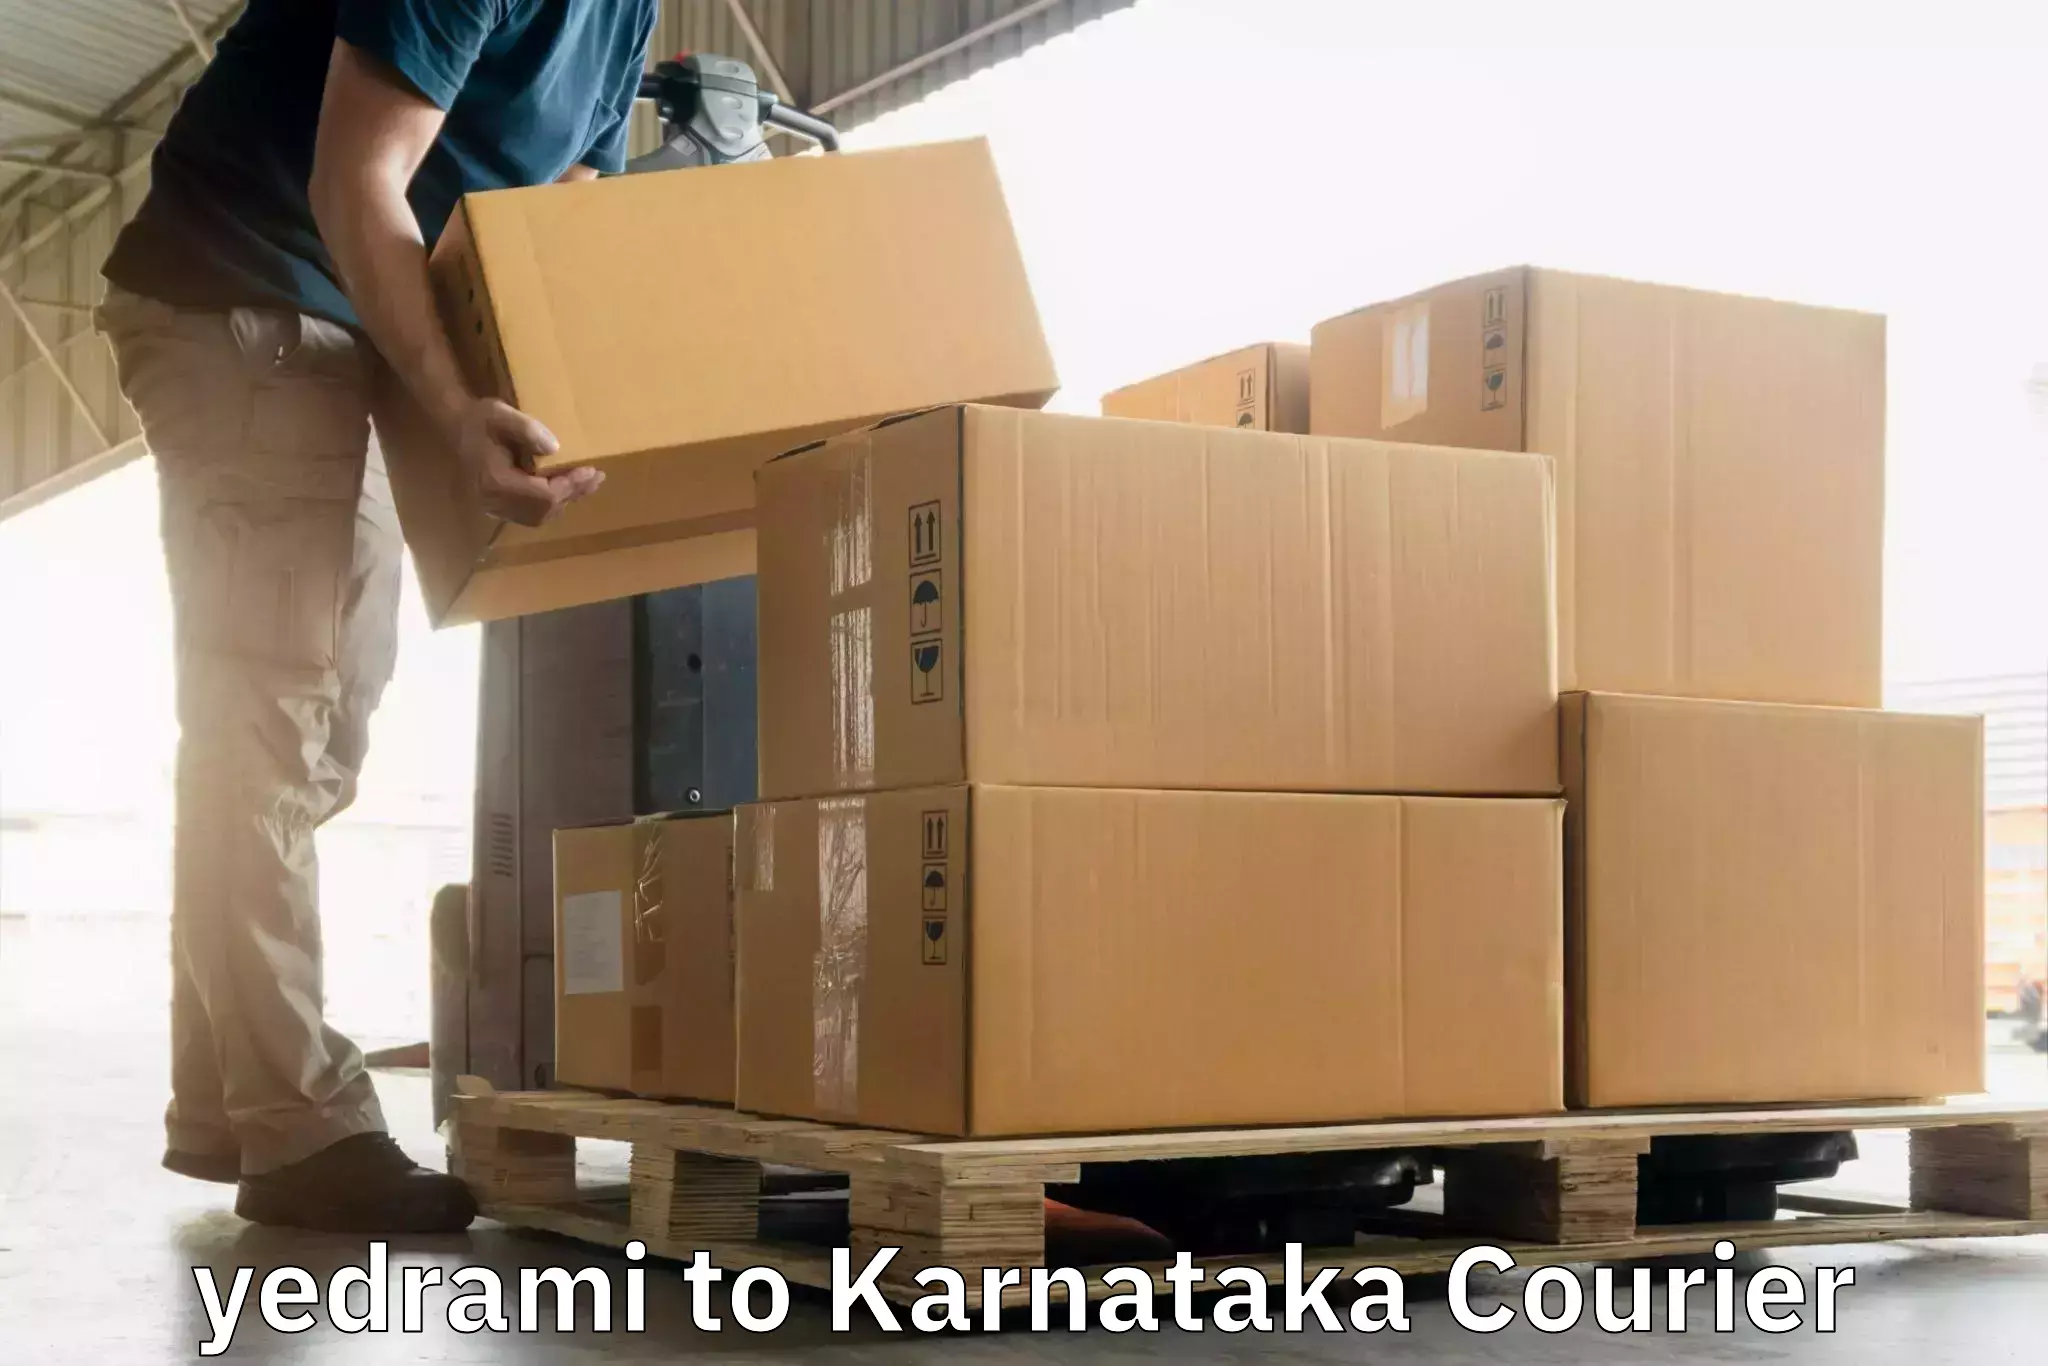 Efficient shipping operations yedrami to Karnataka